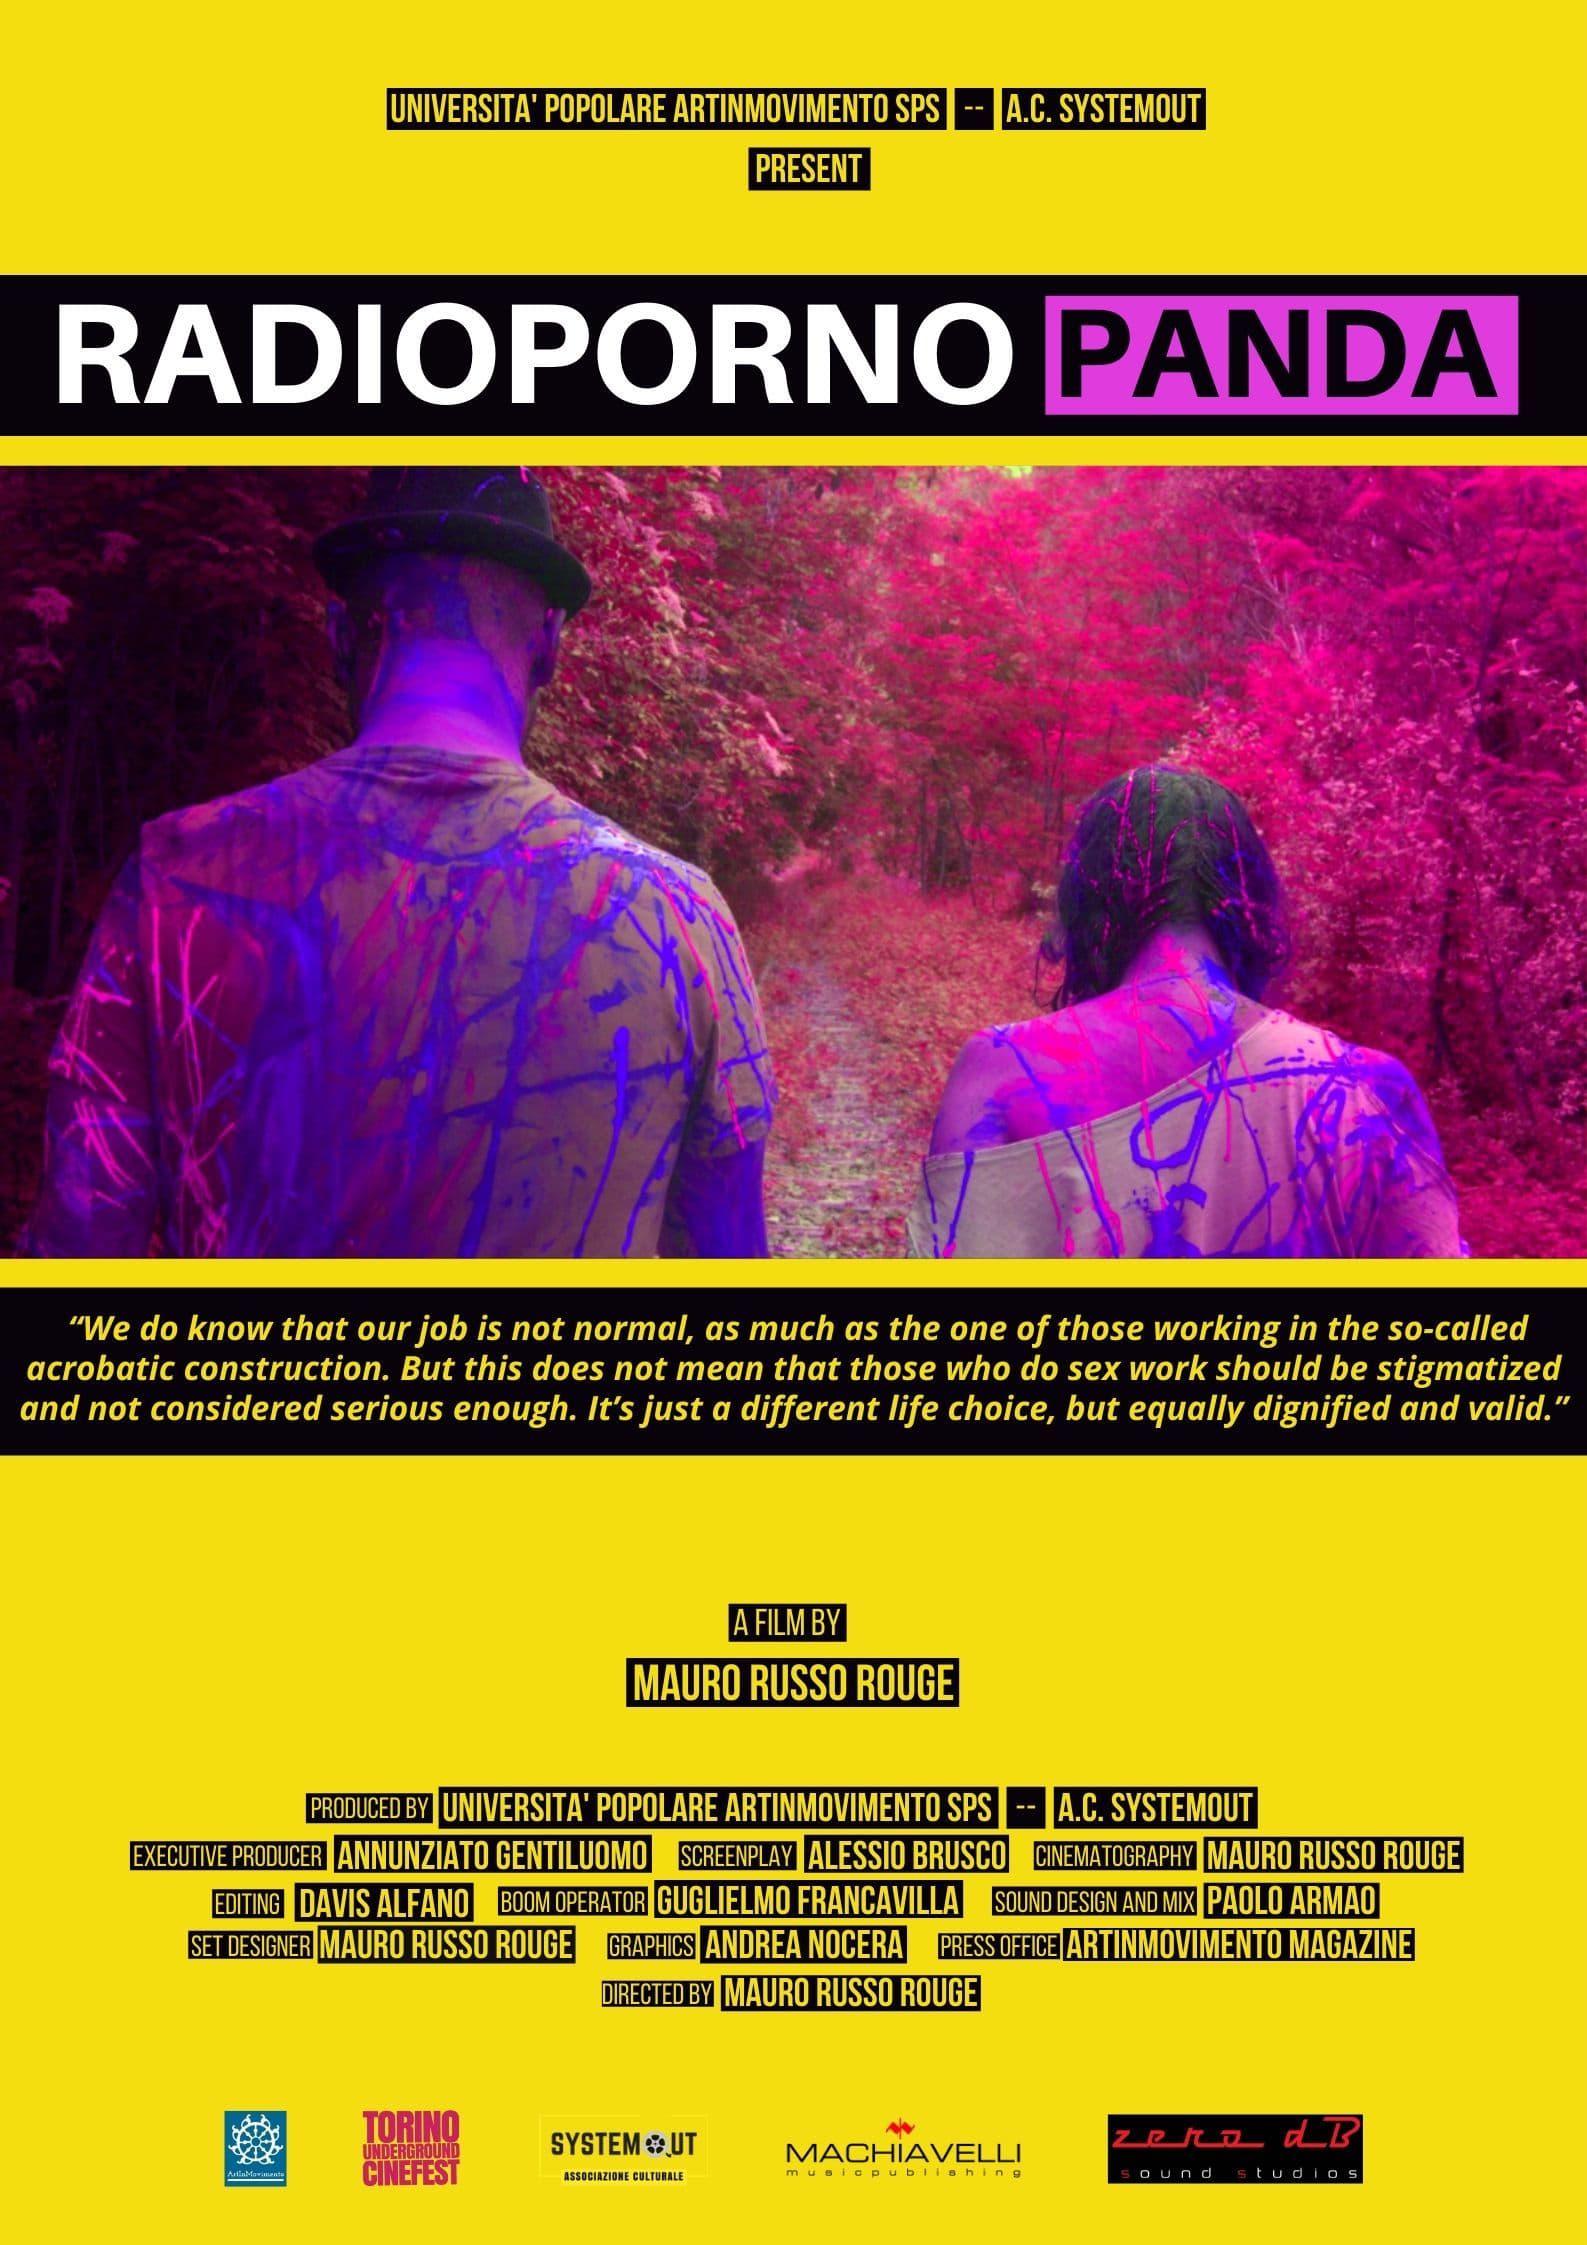 Radiopornopanda poster